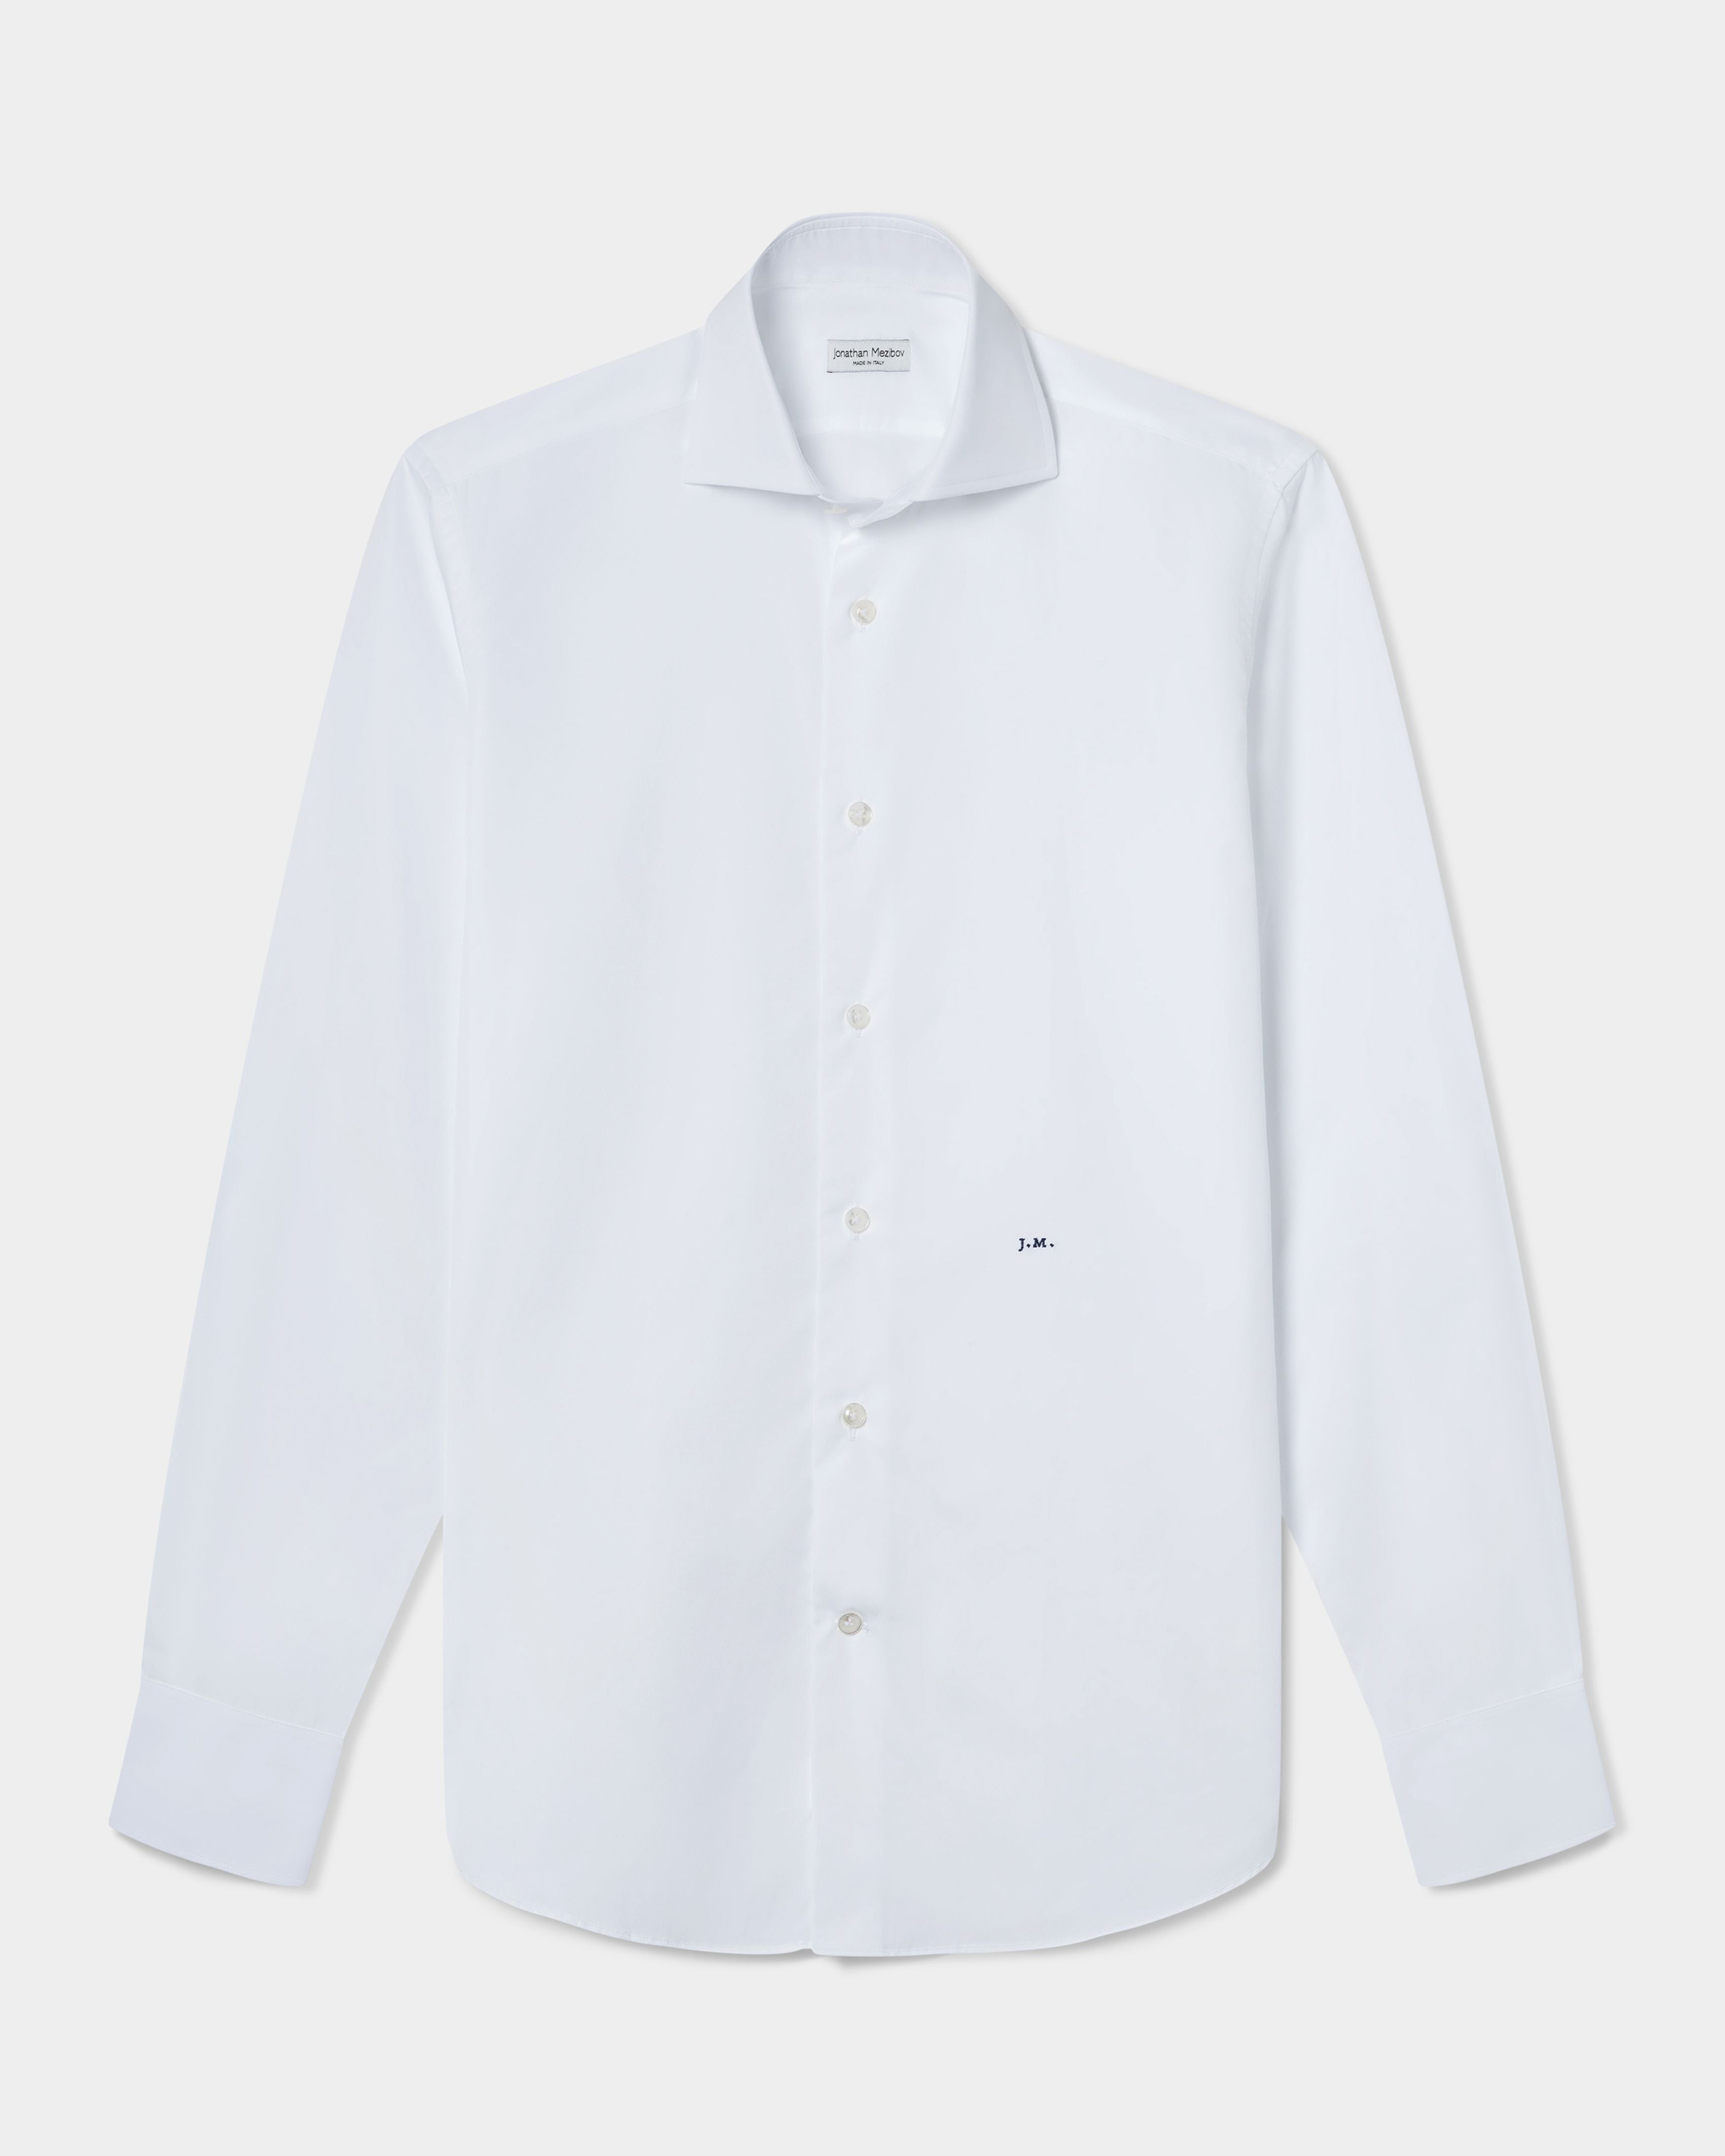 Carmichael Poplin Shirt - Made to Order